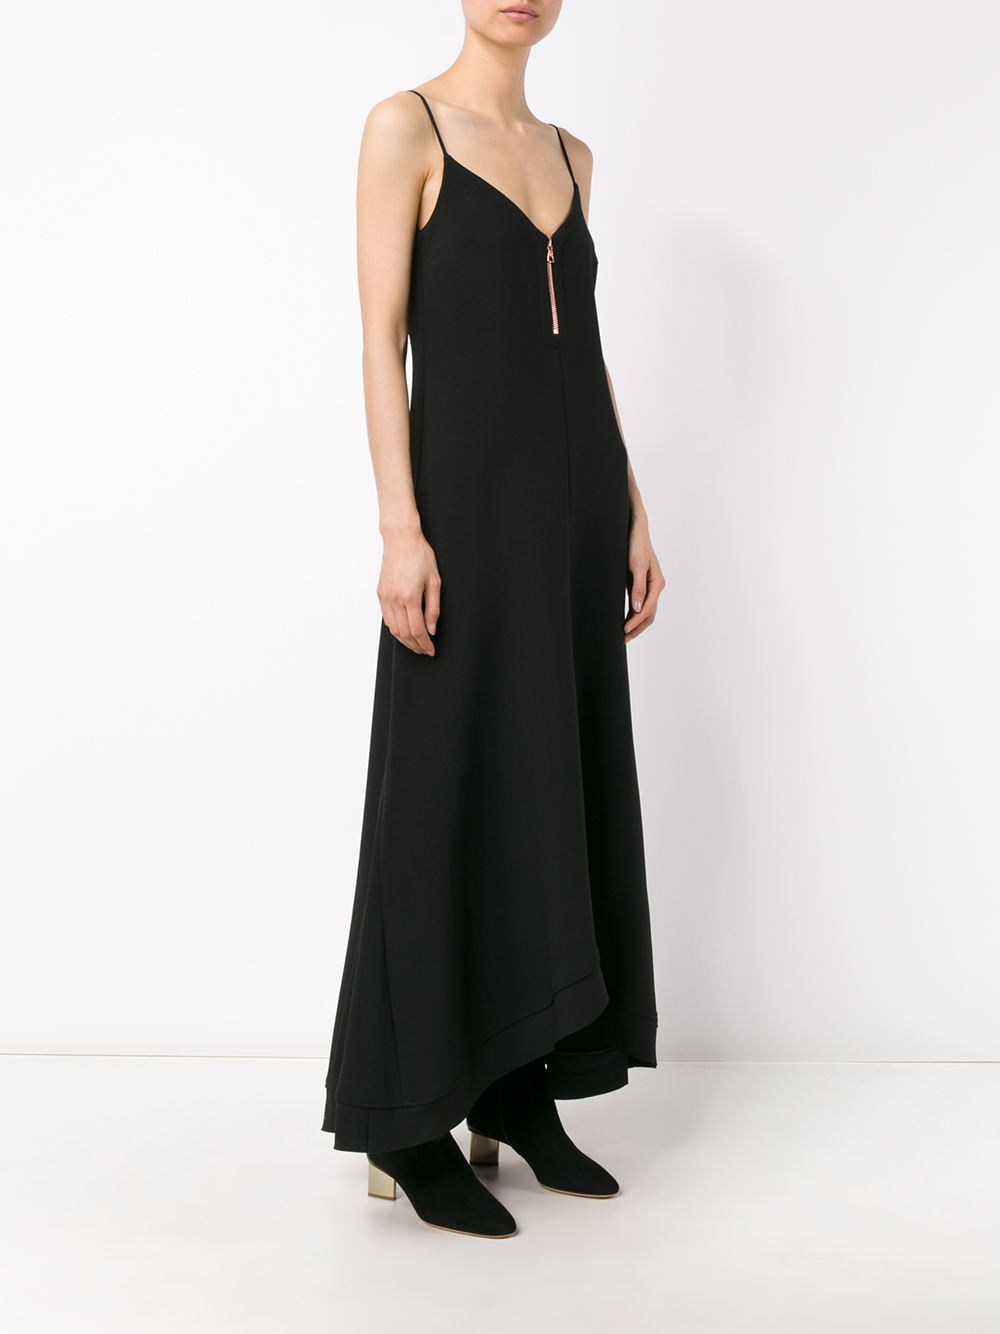 Lyst - Ellery Spaghetti Strap Maxi Dress in Black